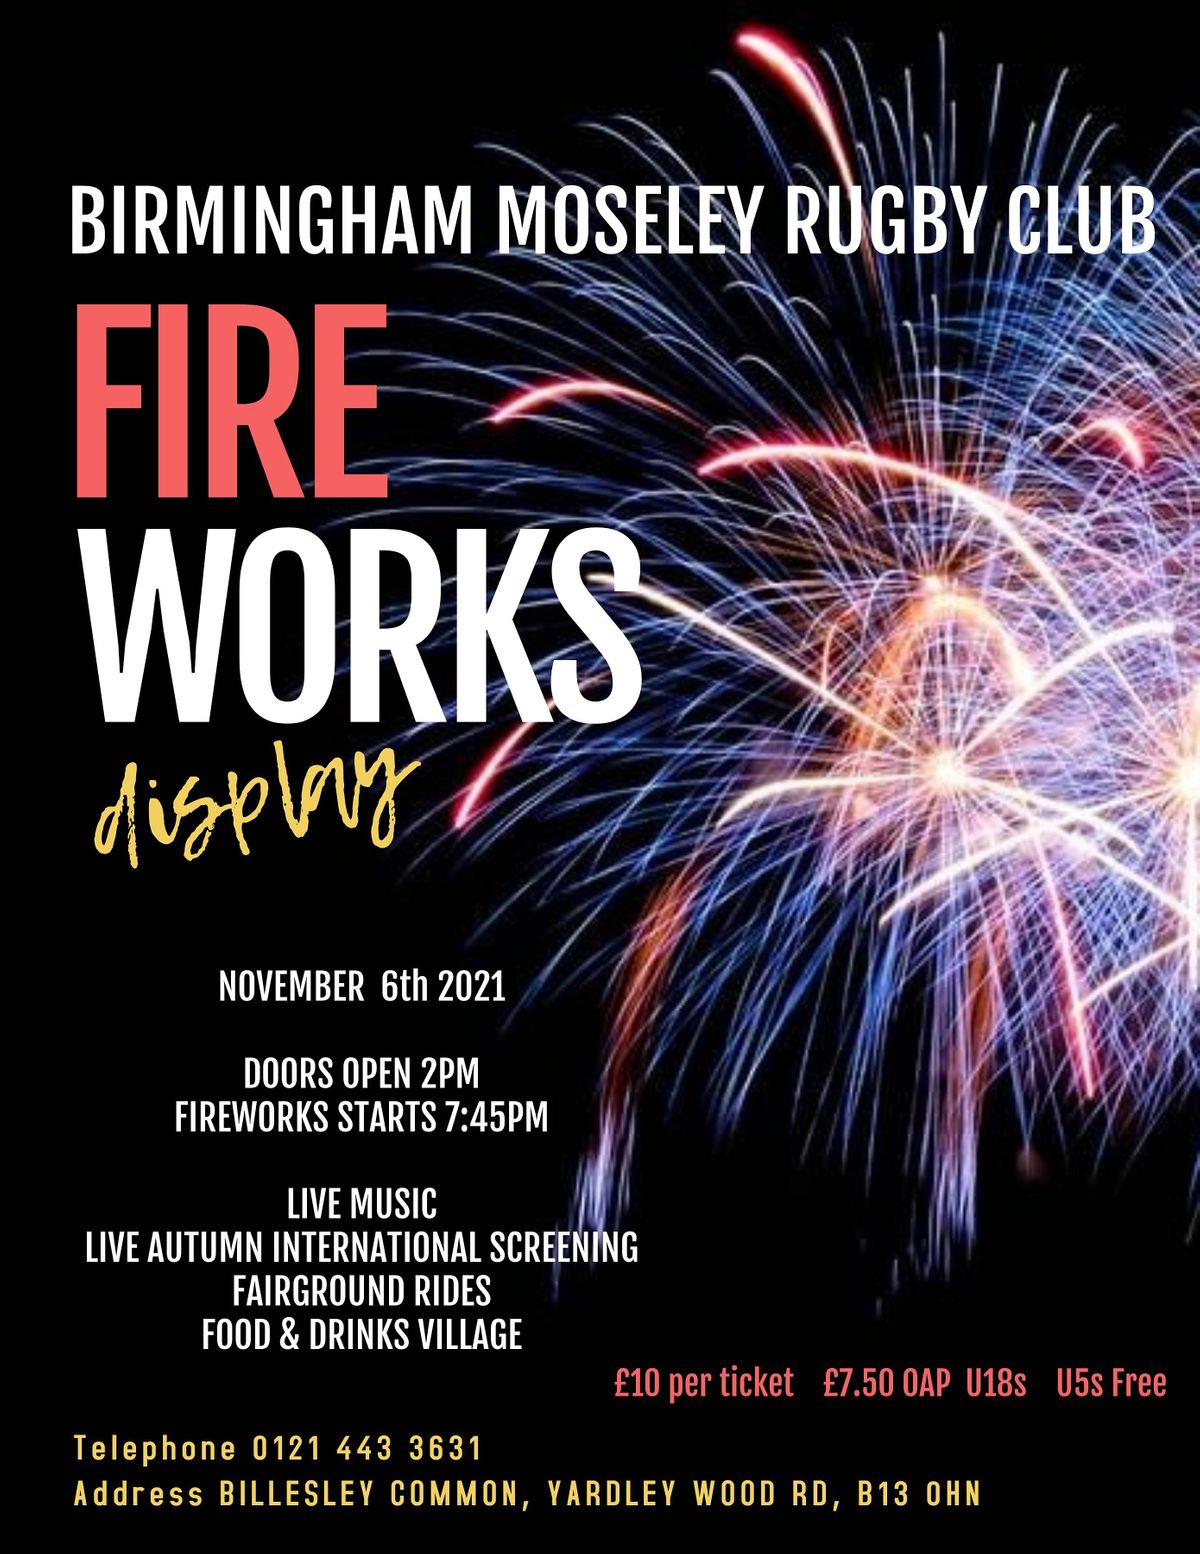 Birmingham Moseley Rugby Club Fireworks Display, Birmingham Moseley